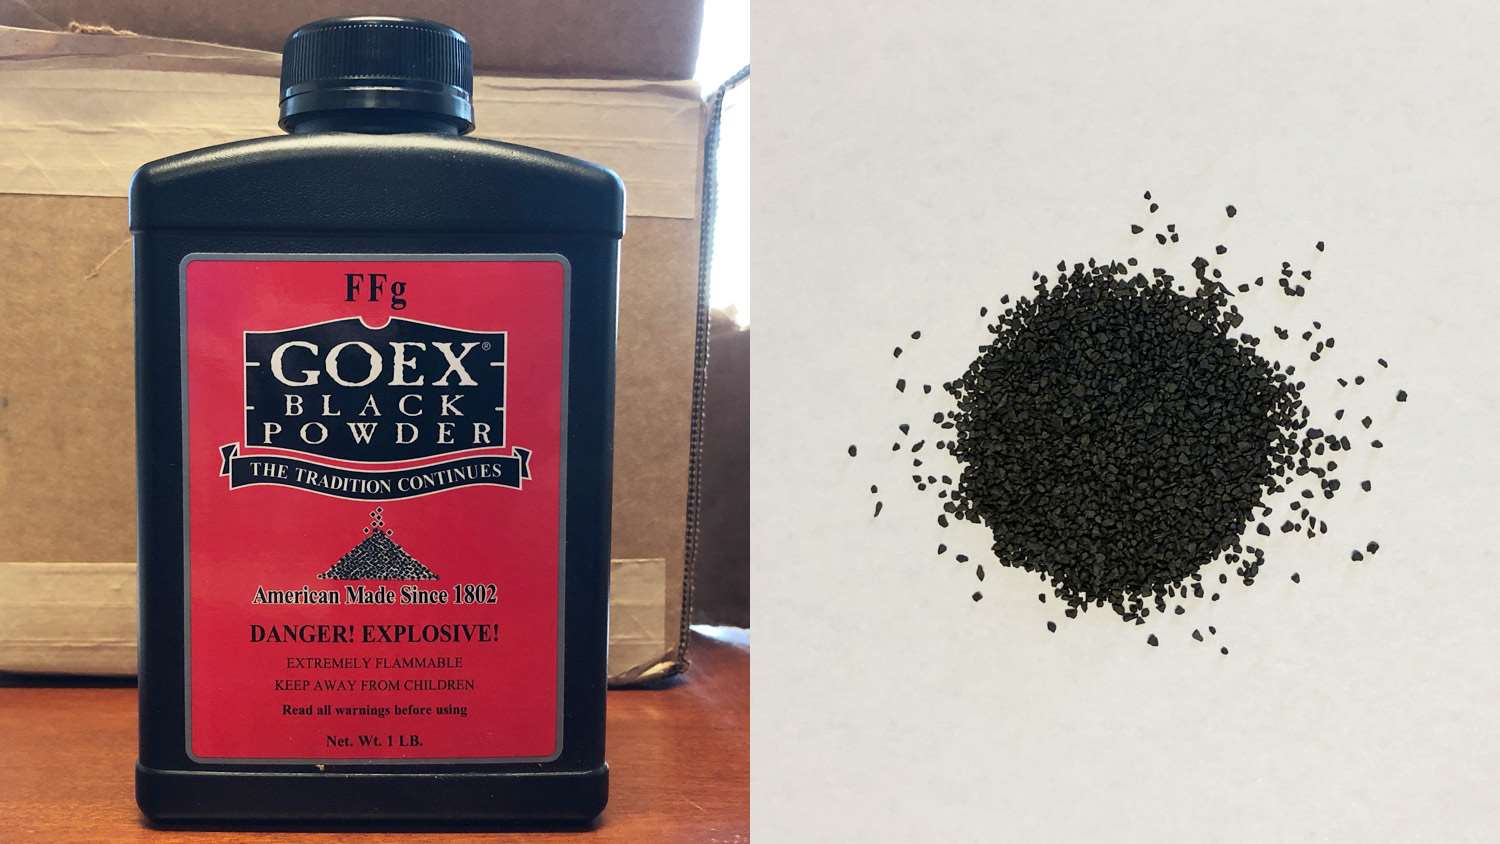 Black powder, explosive